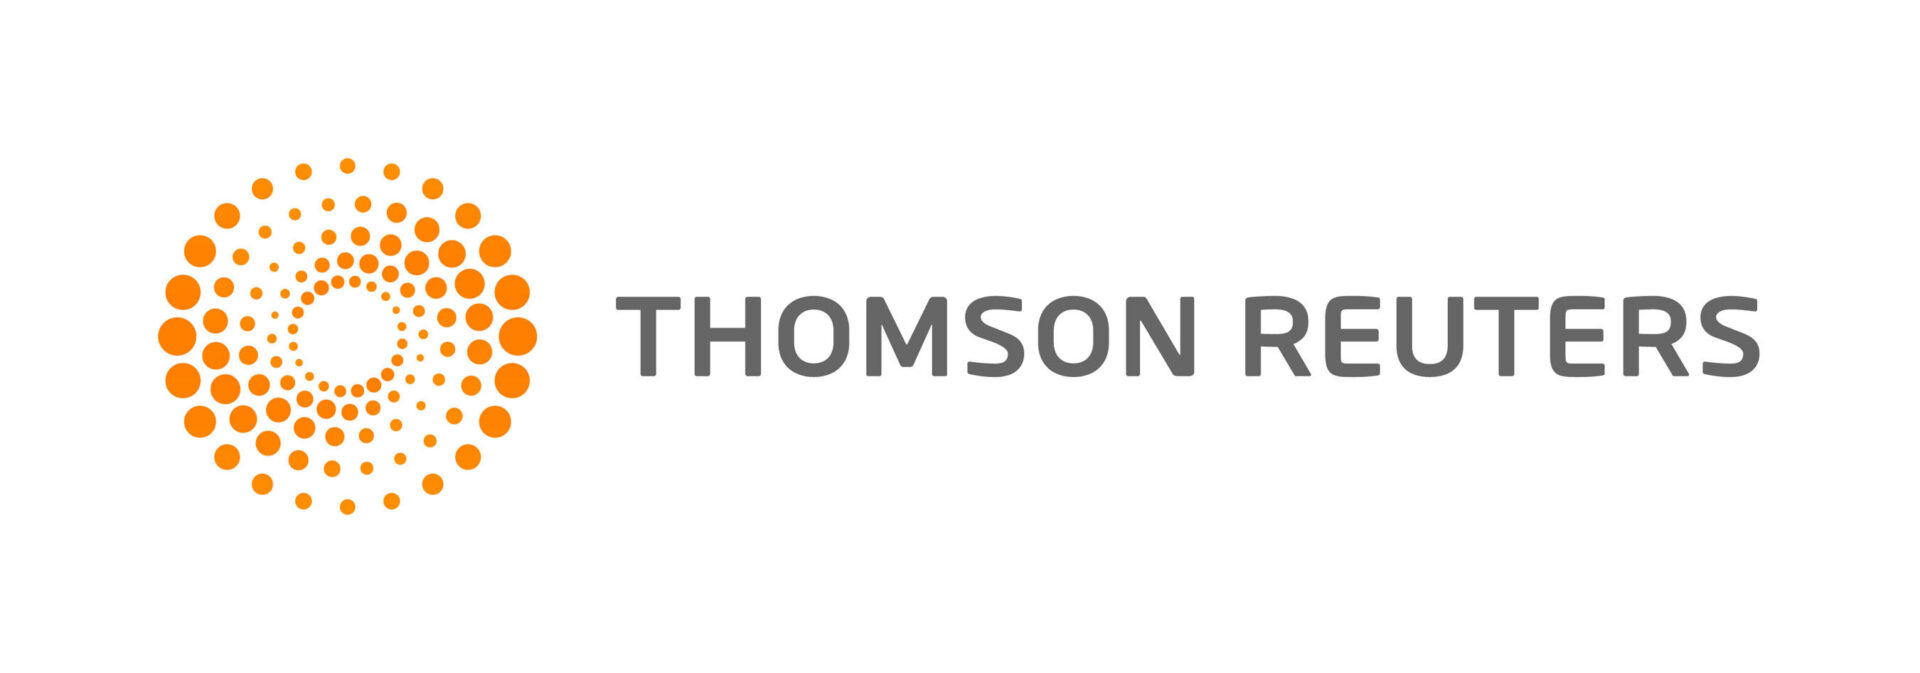 Thomson Reuters logo.  (PRNewsFoto/Thomson Reuters)